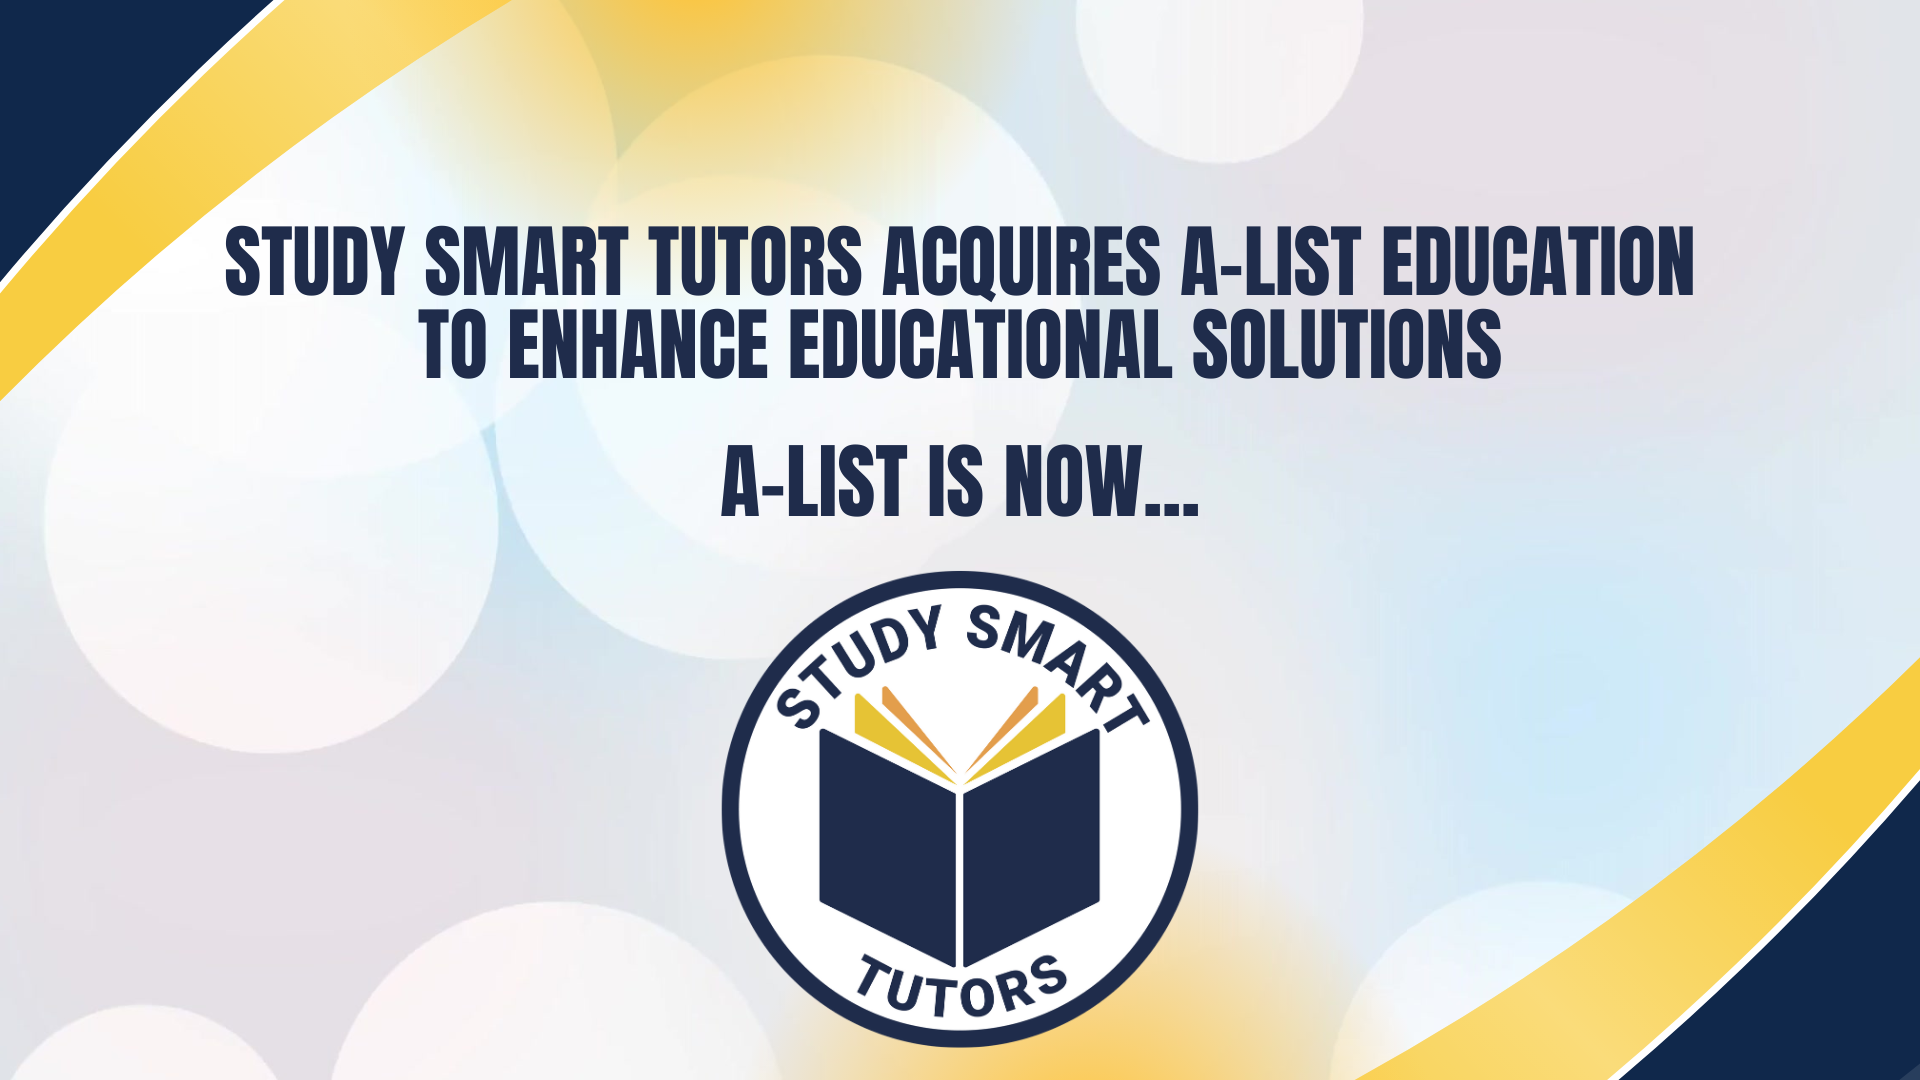 Study Smart Tutors has aquired A-List Education